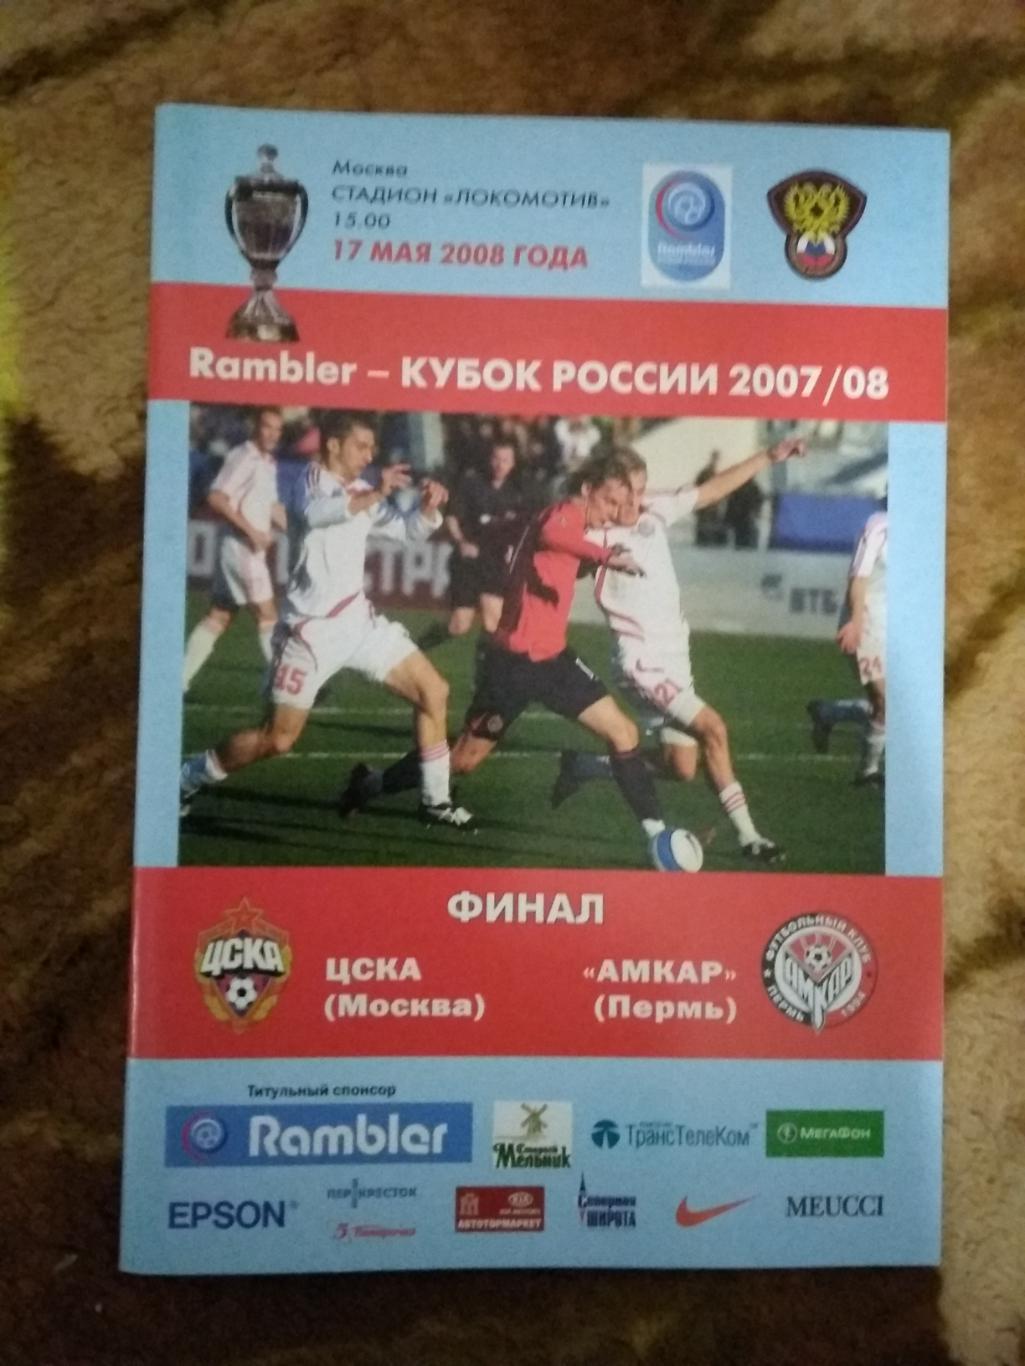 ЦСКА (Москва) - Амкар (Пермь).Кубок России финал 2008 г.